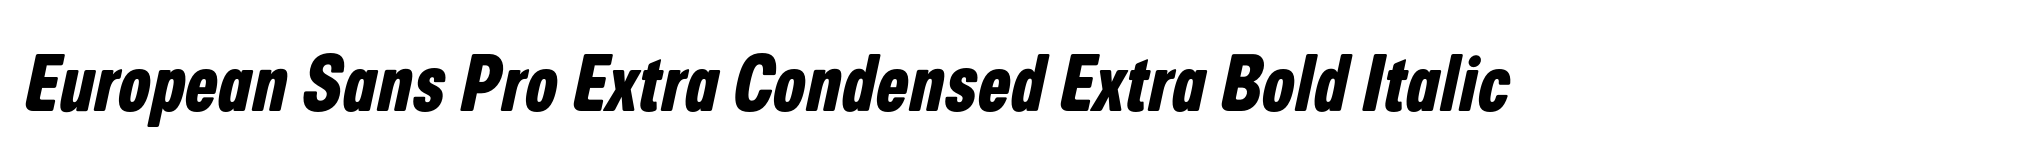 European Sans Pro Extra Condensed Extra Bold Italic image